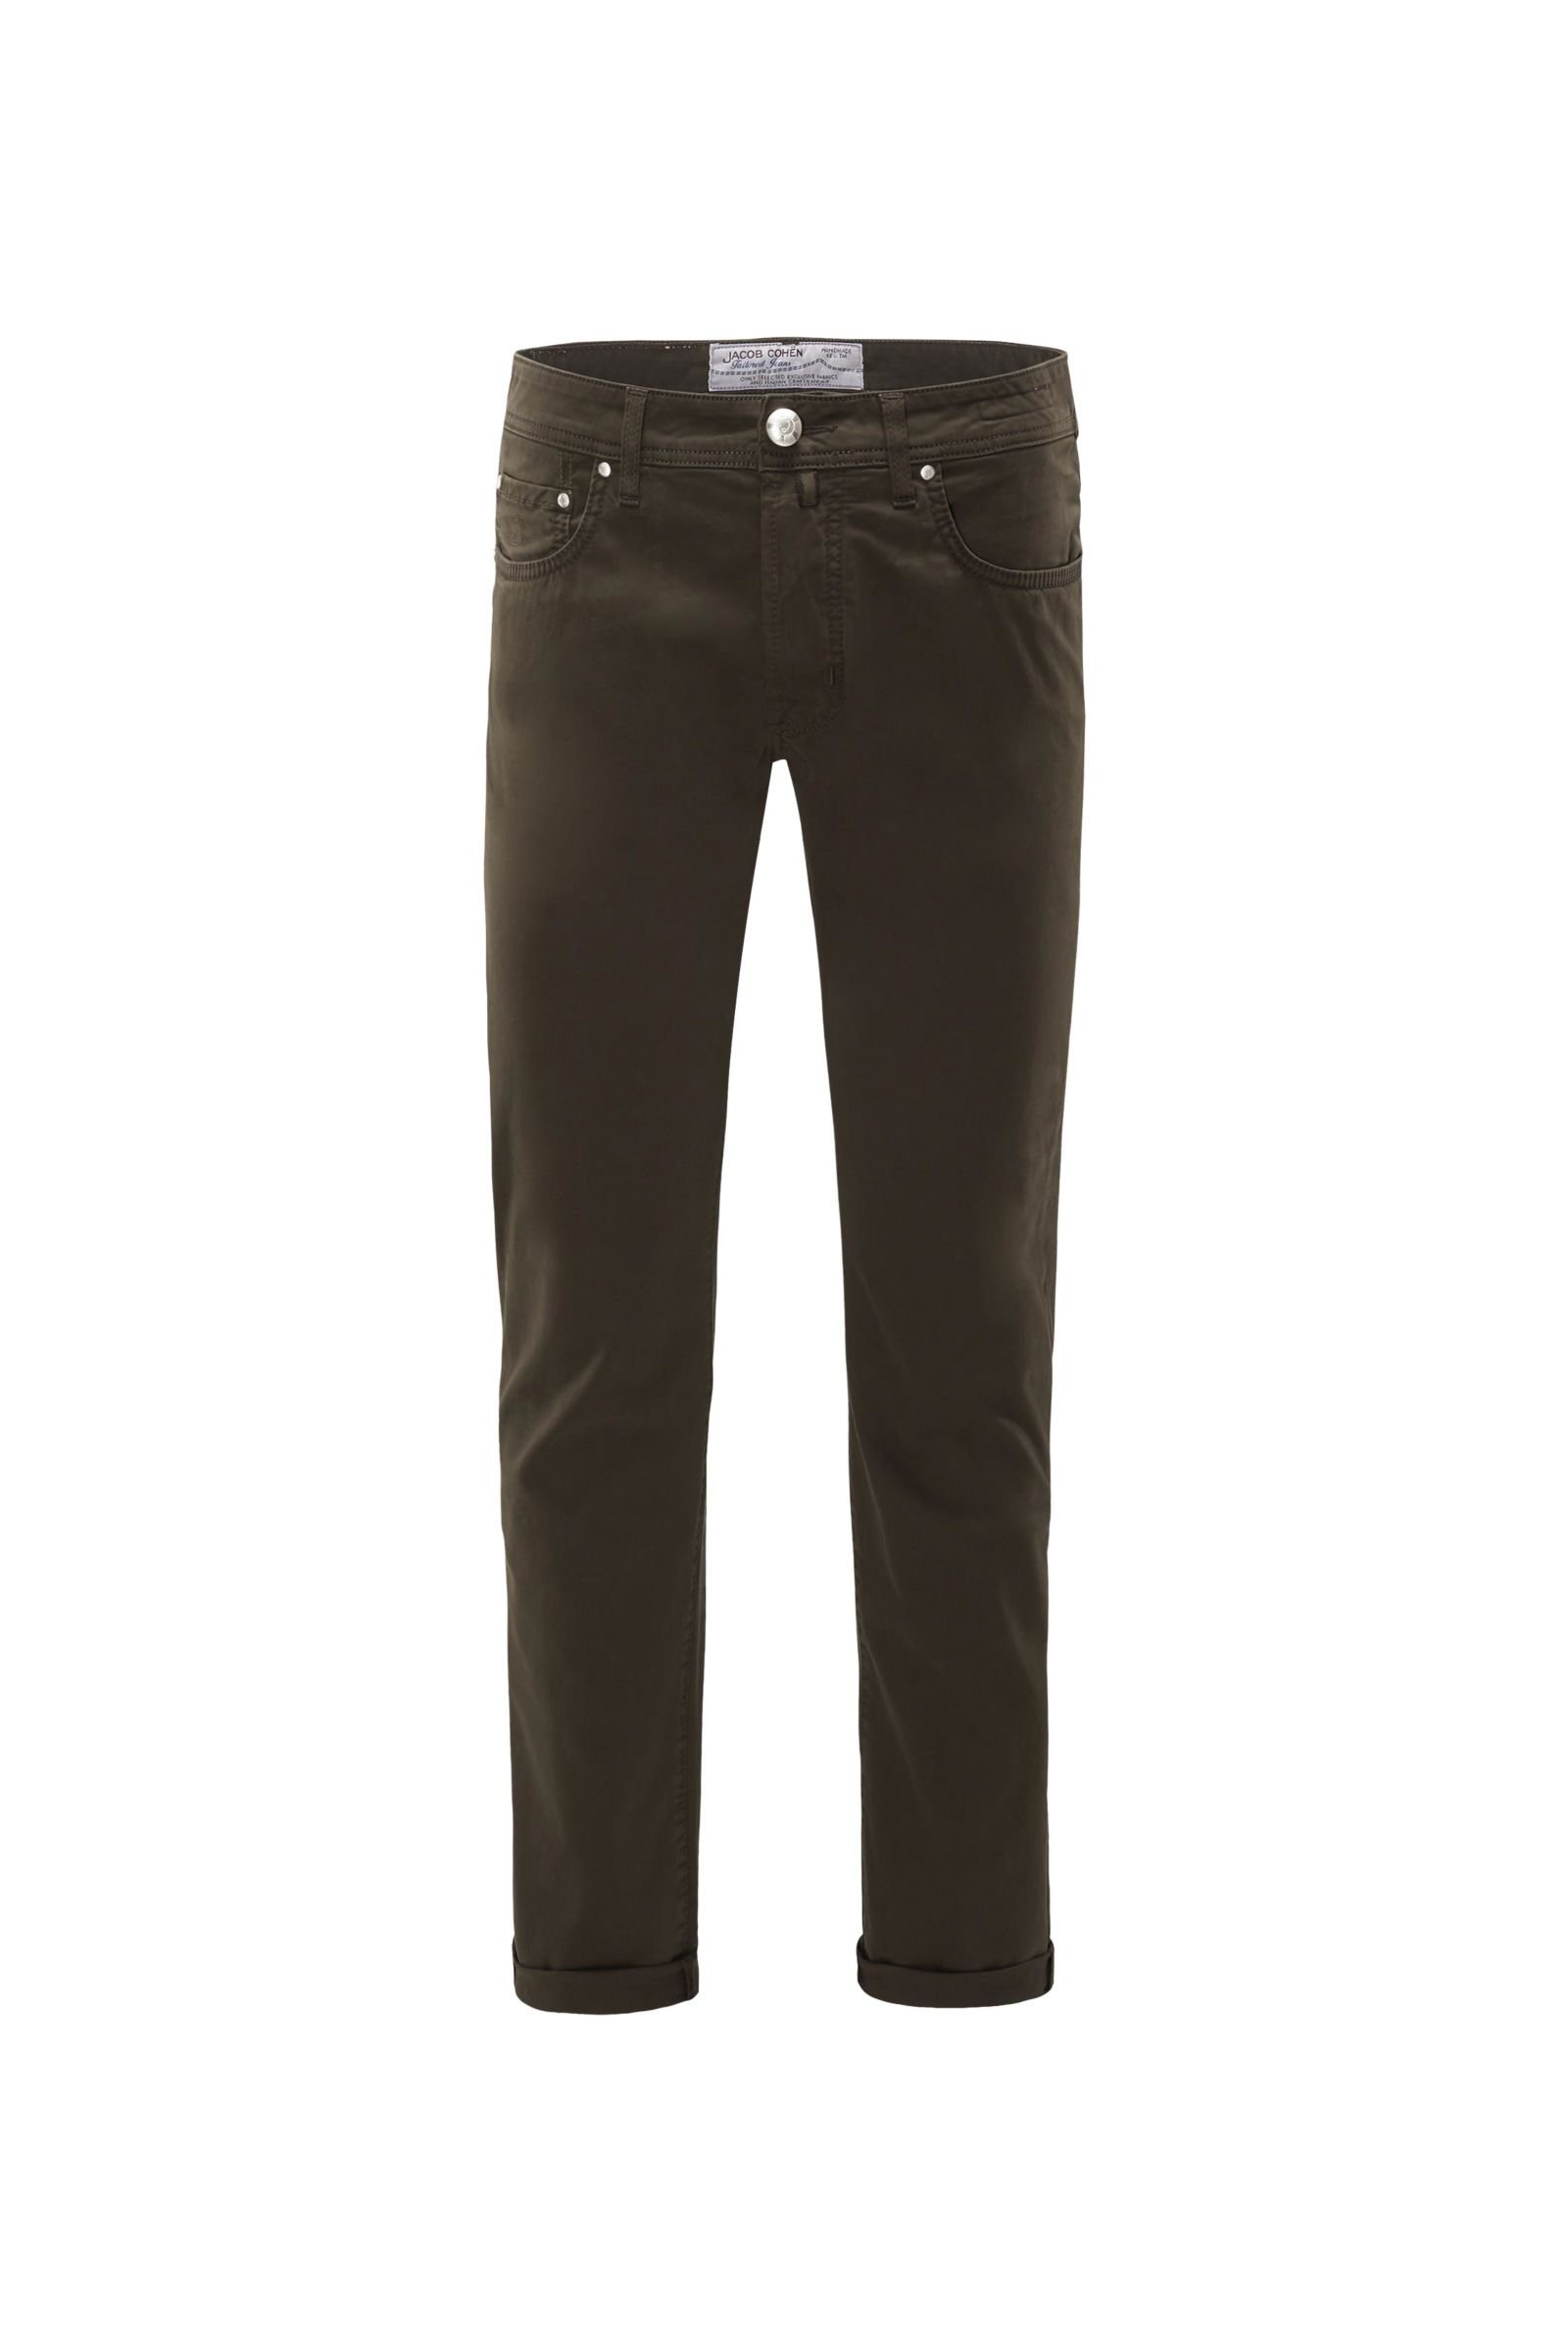 Cotton trousers 'PW688 Comfort Slim Fit' dark brown